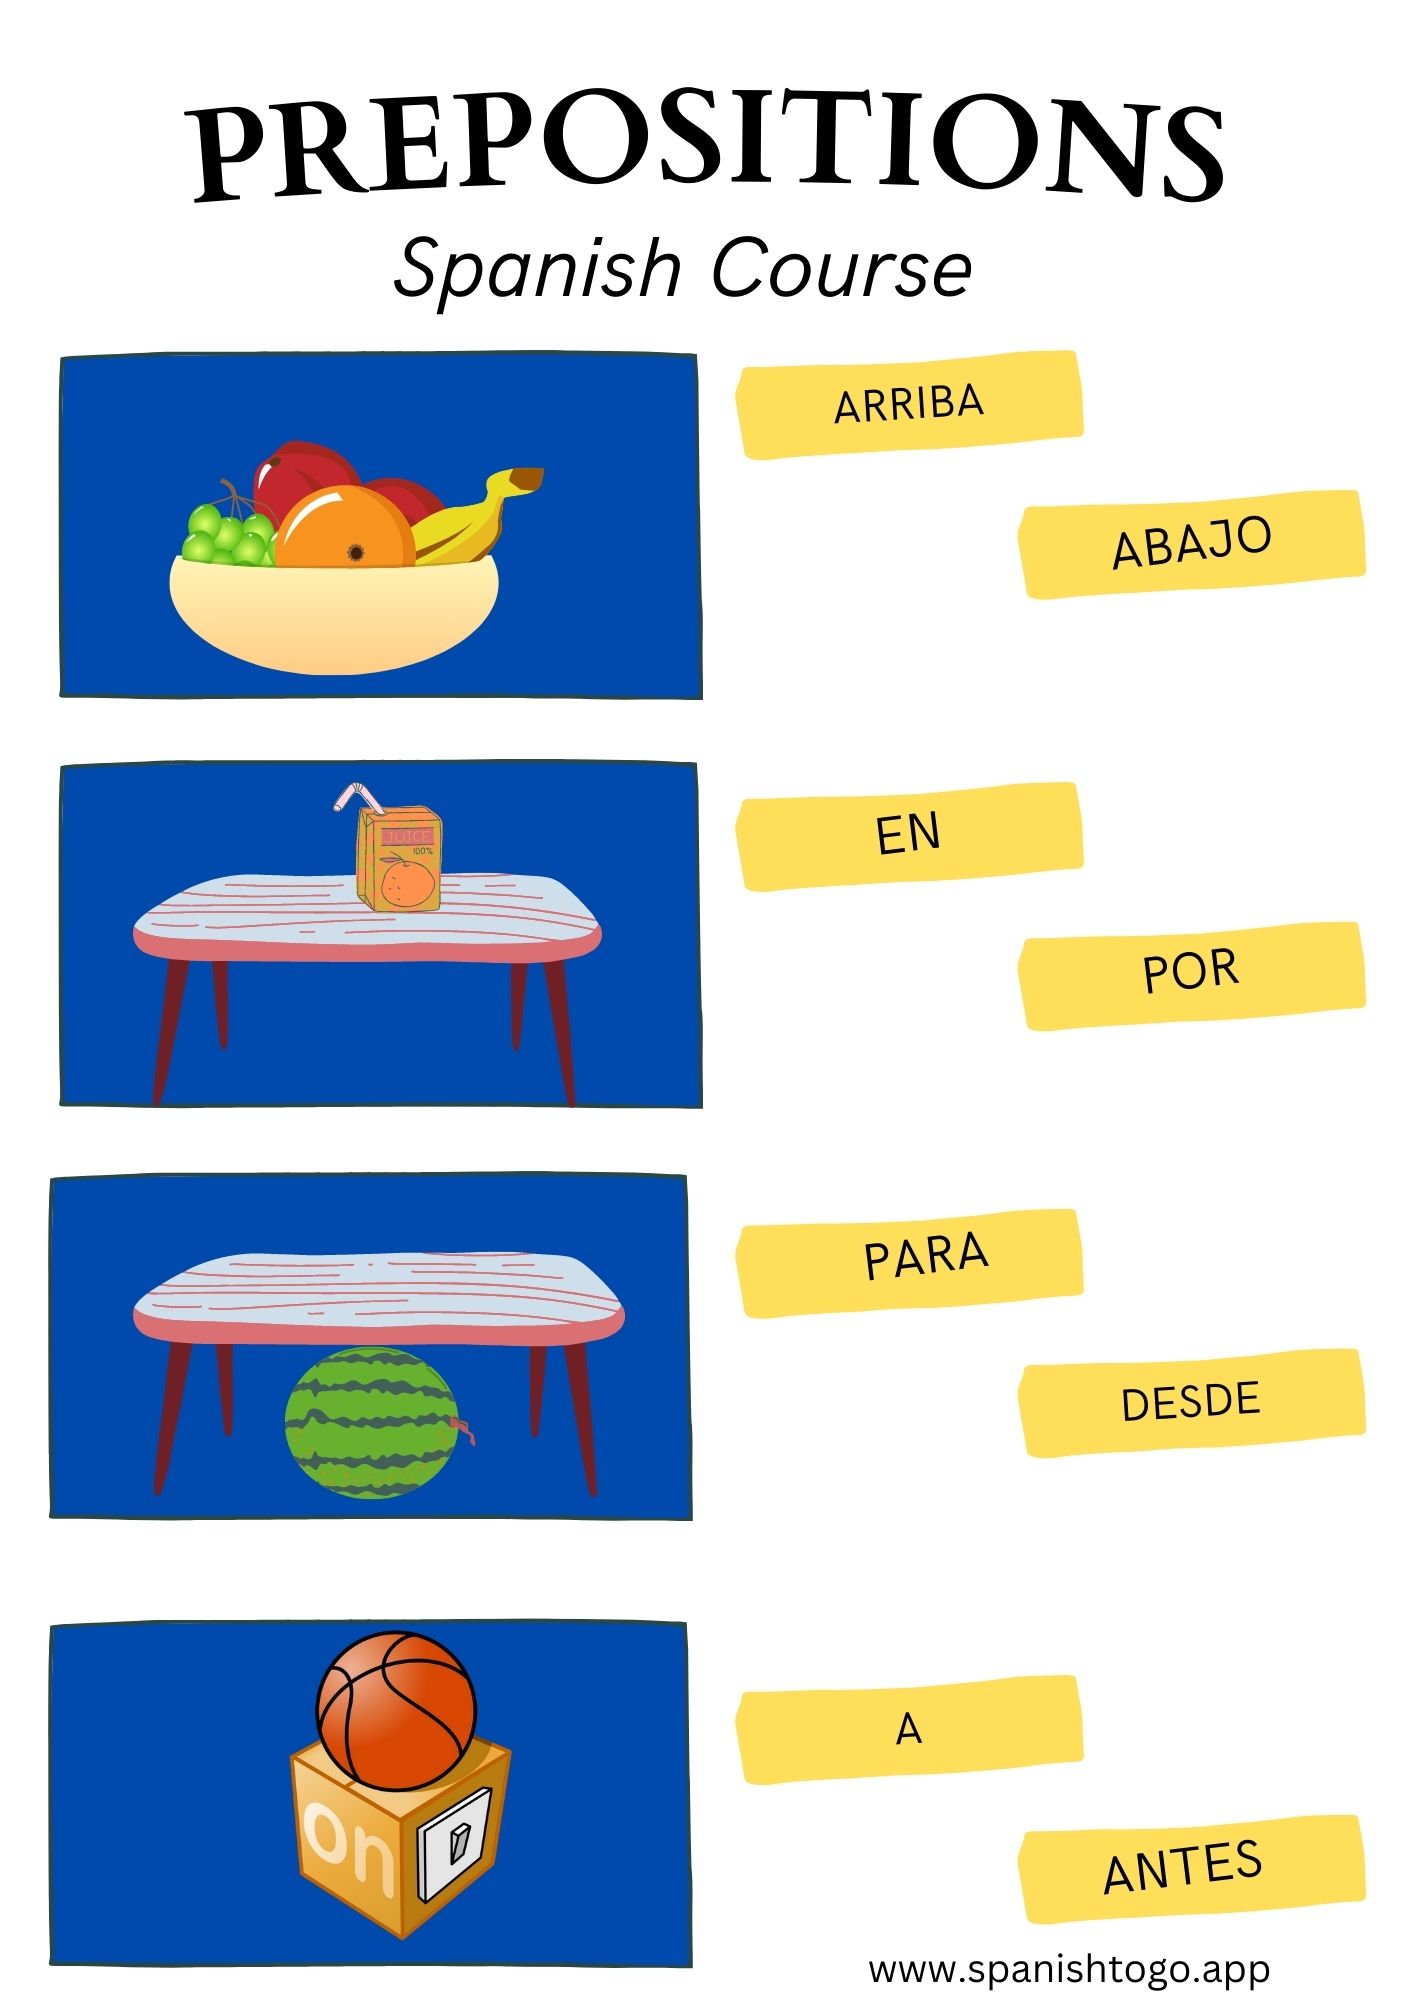 Mastering Prepositions in Spanish